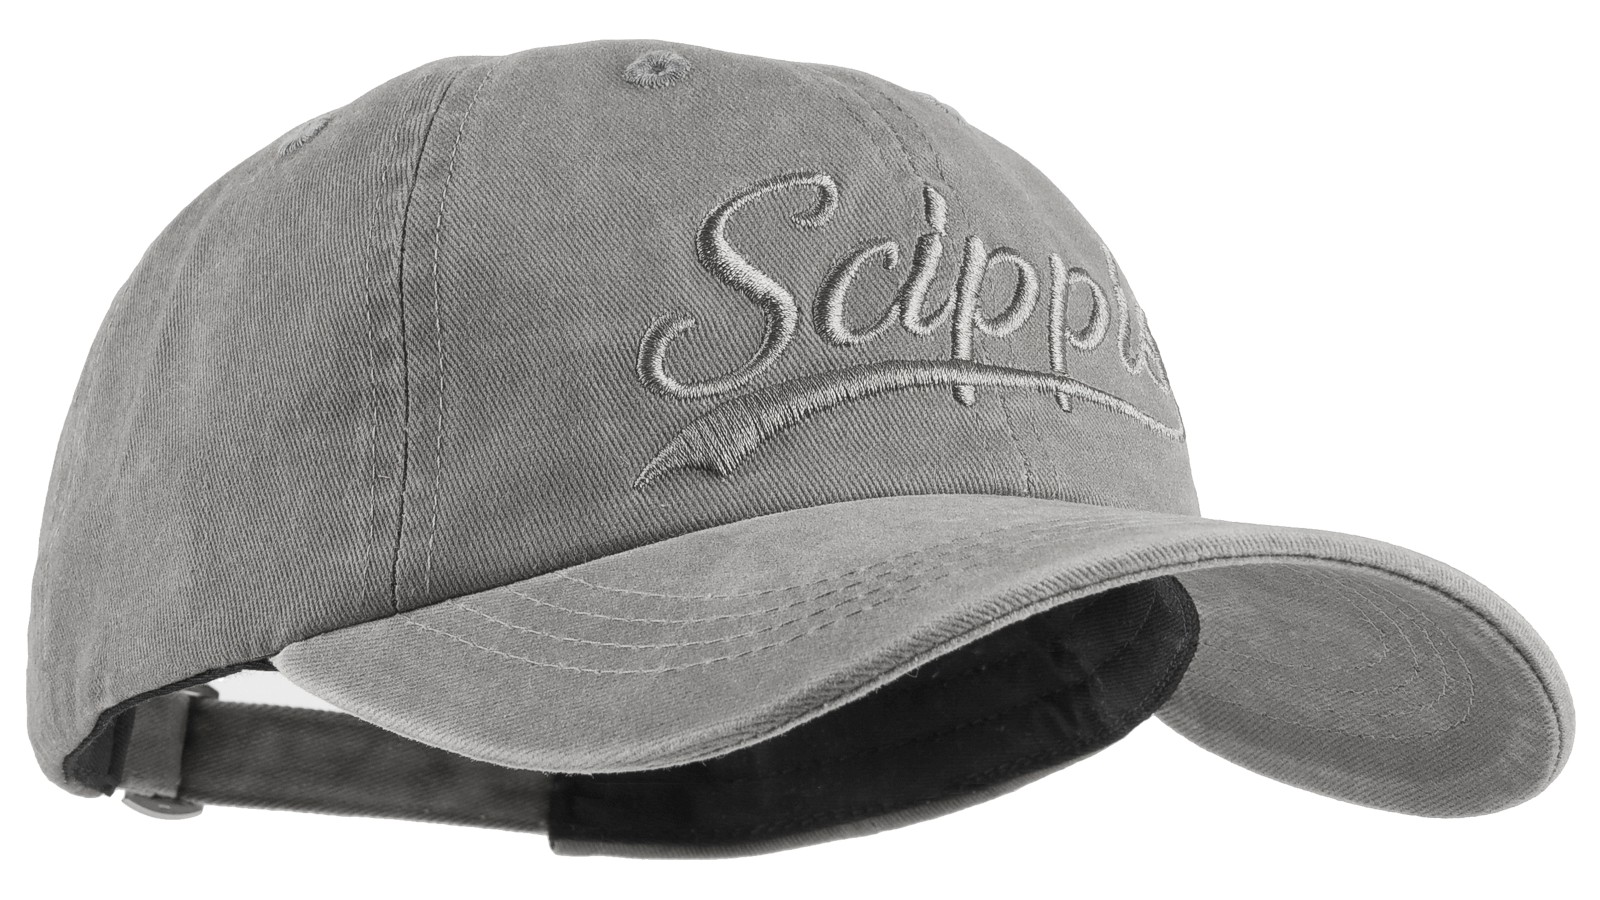 Scippis Baseball-Cap »Scippis Schriftzug« Grau